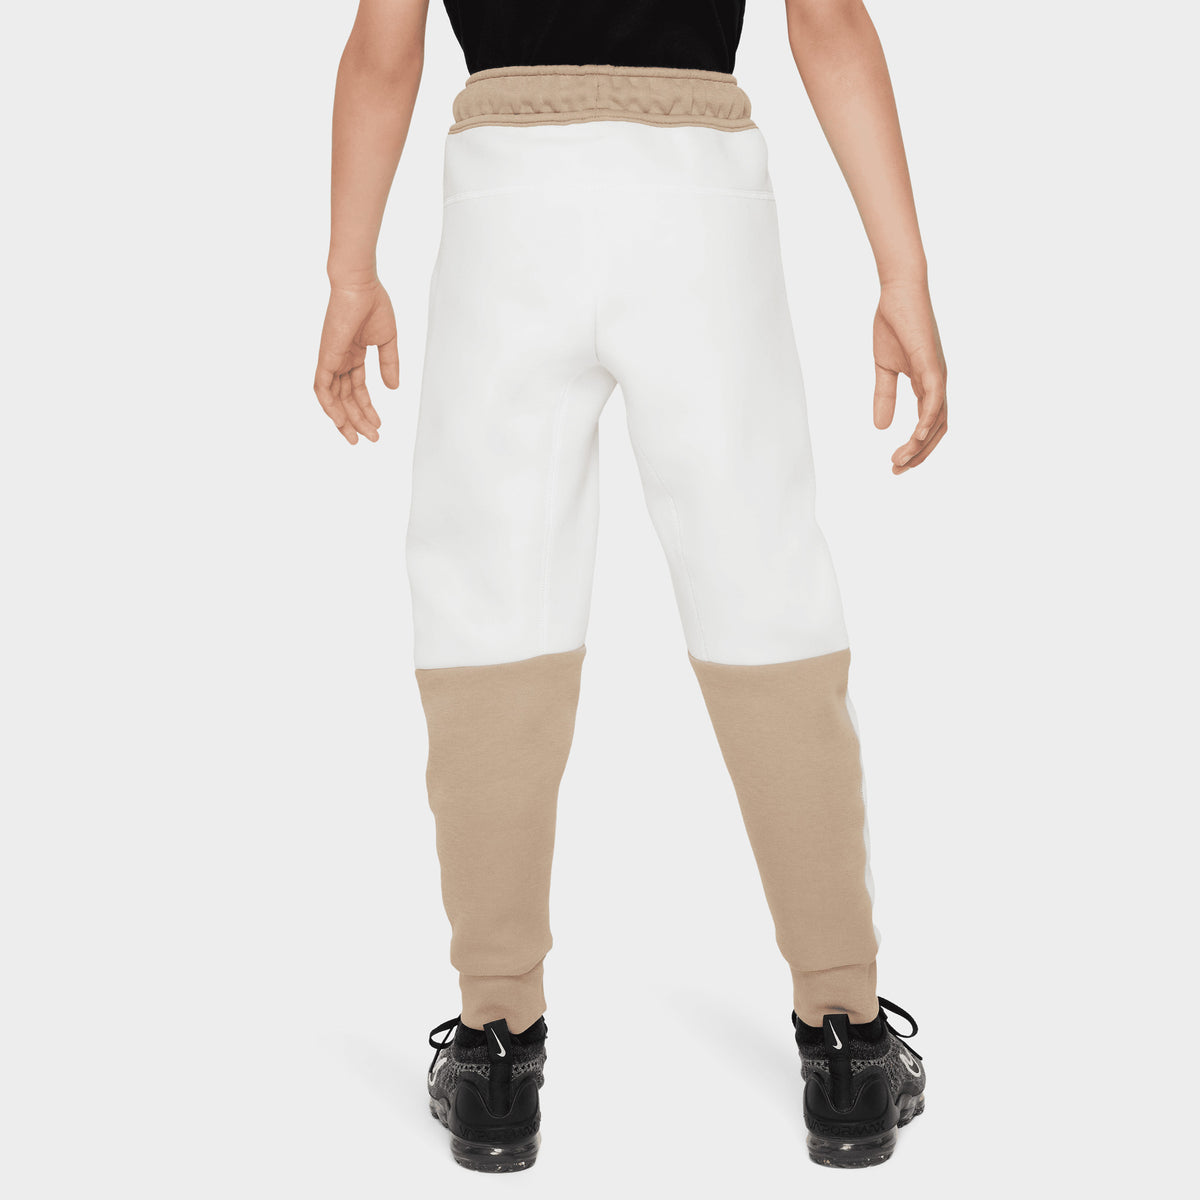 NIKE Sportswear Tech Fleece Pants CW4292 673 - Shiekh